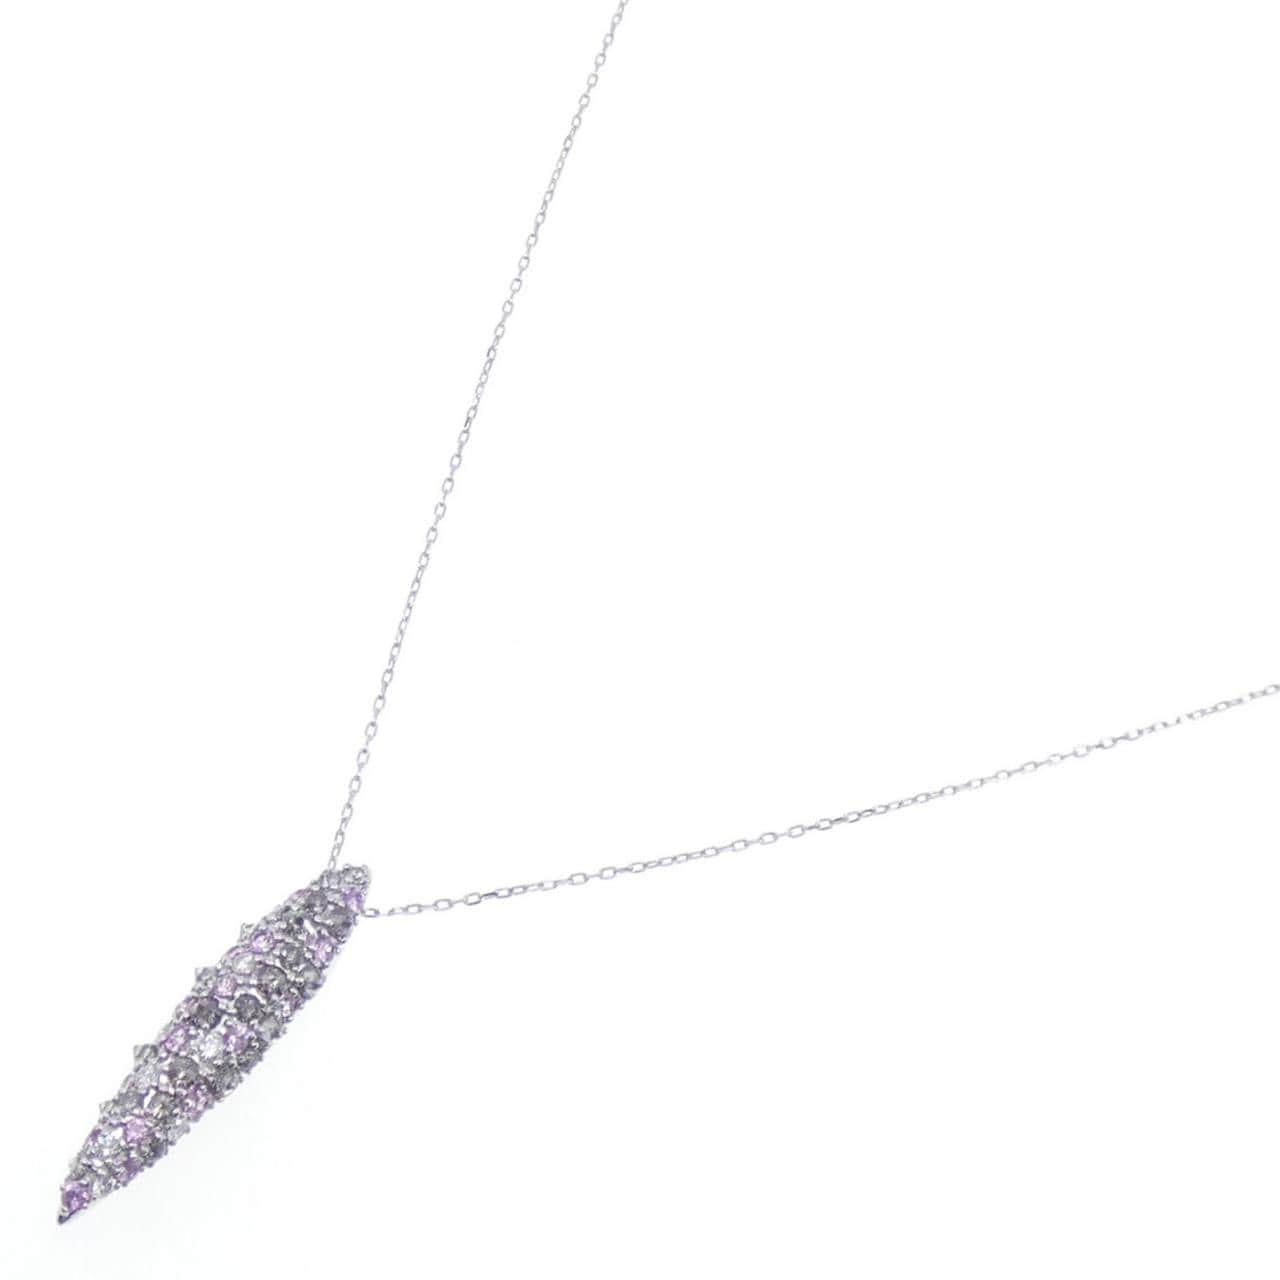 Tasaki sapphire necklace